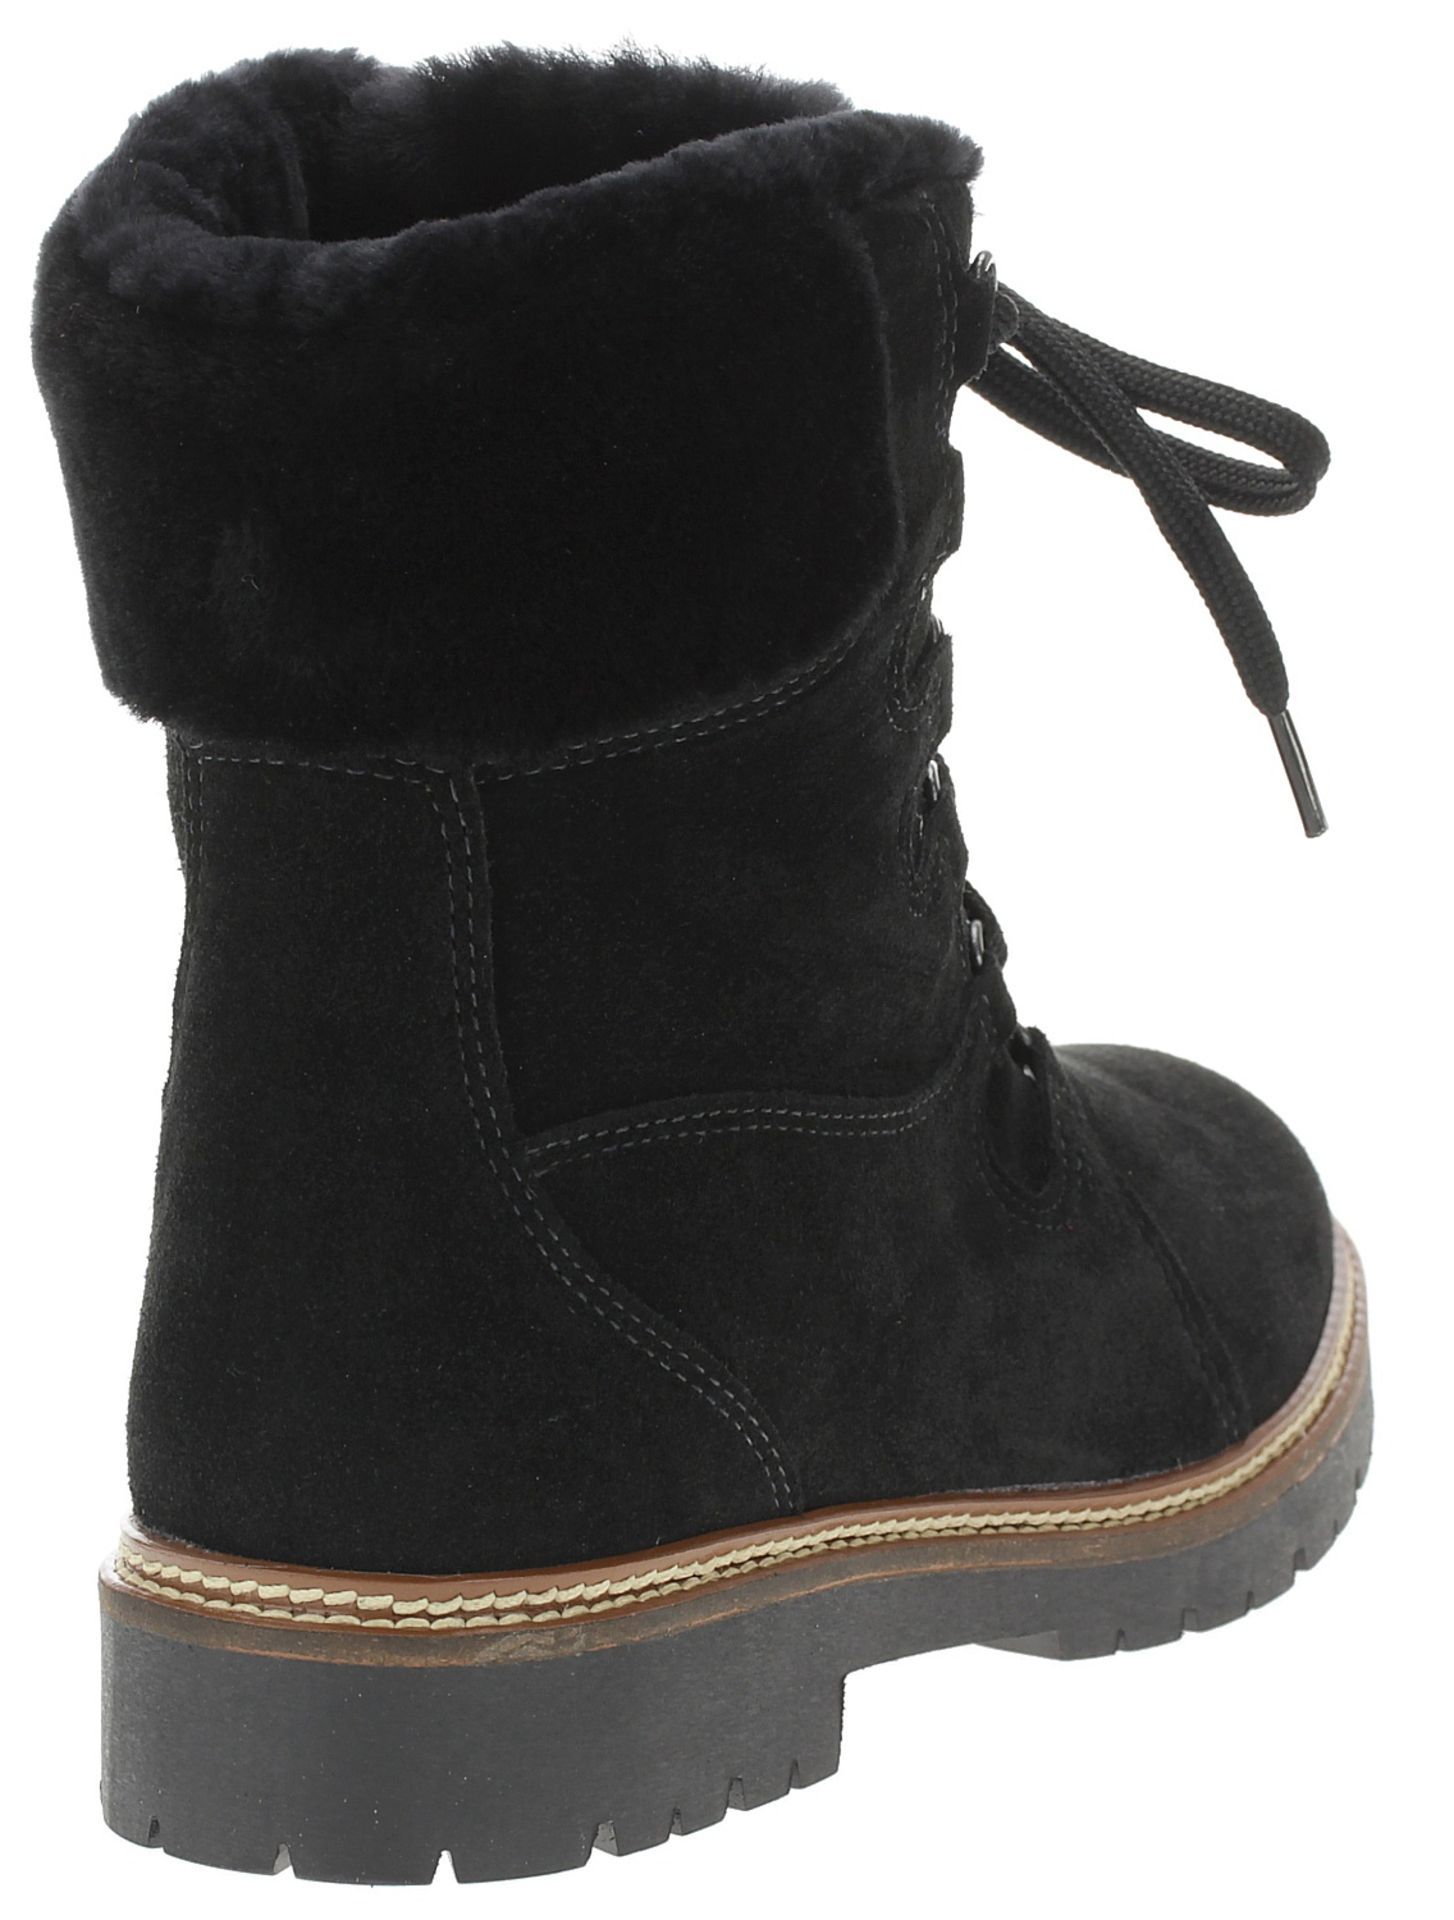 1 x Pair of Designer Olang Meribel 81 Nero Women's Winter Boots - Euro Size 38 - Brand New Boxed - Image 5 of 5